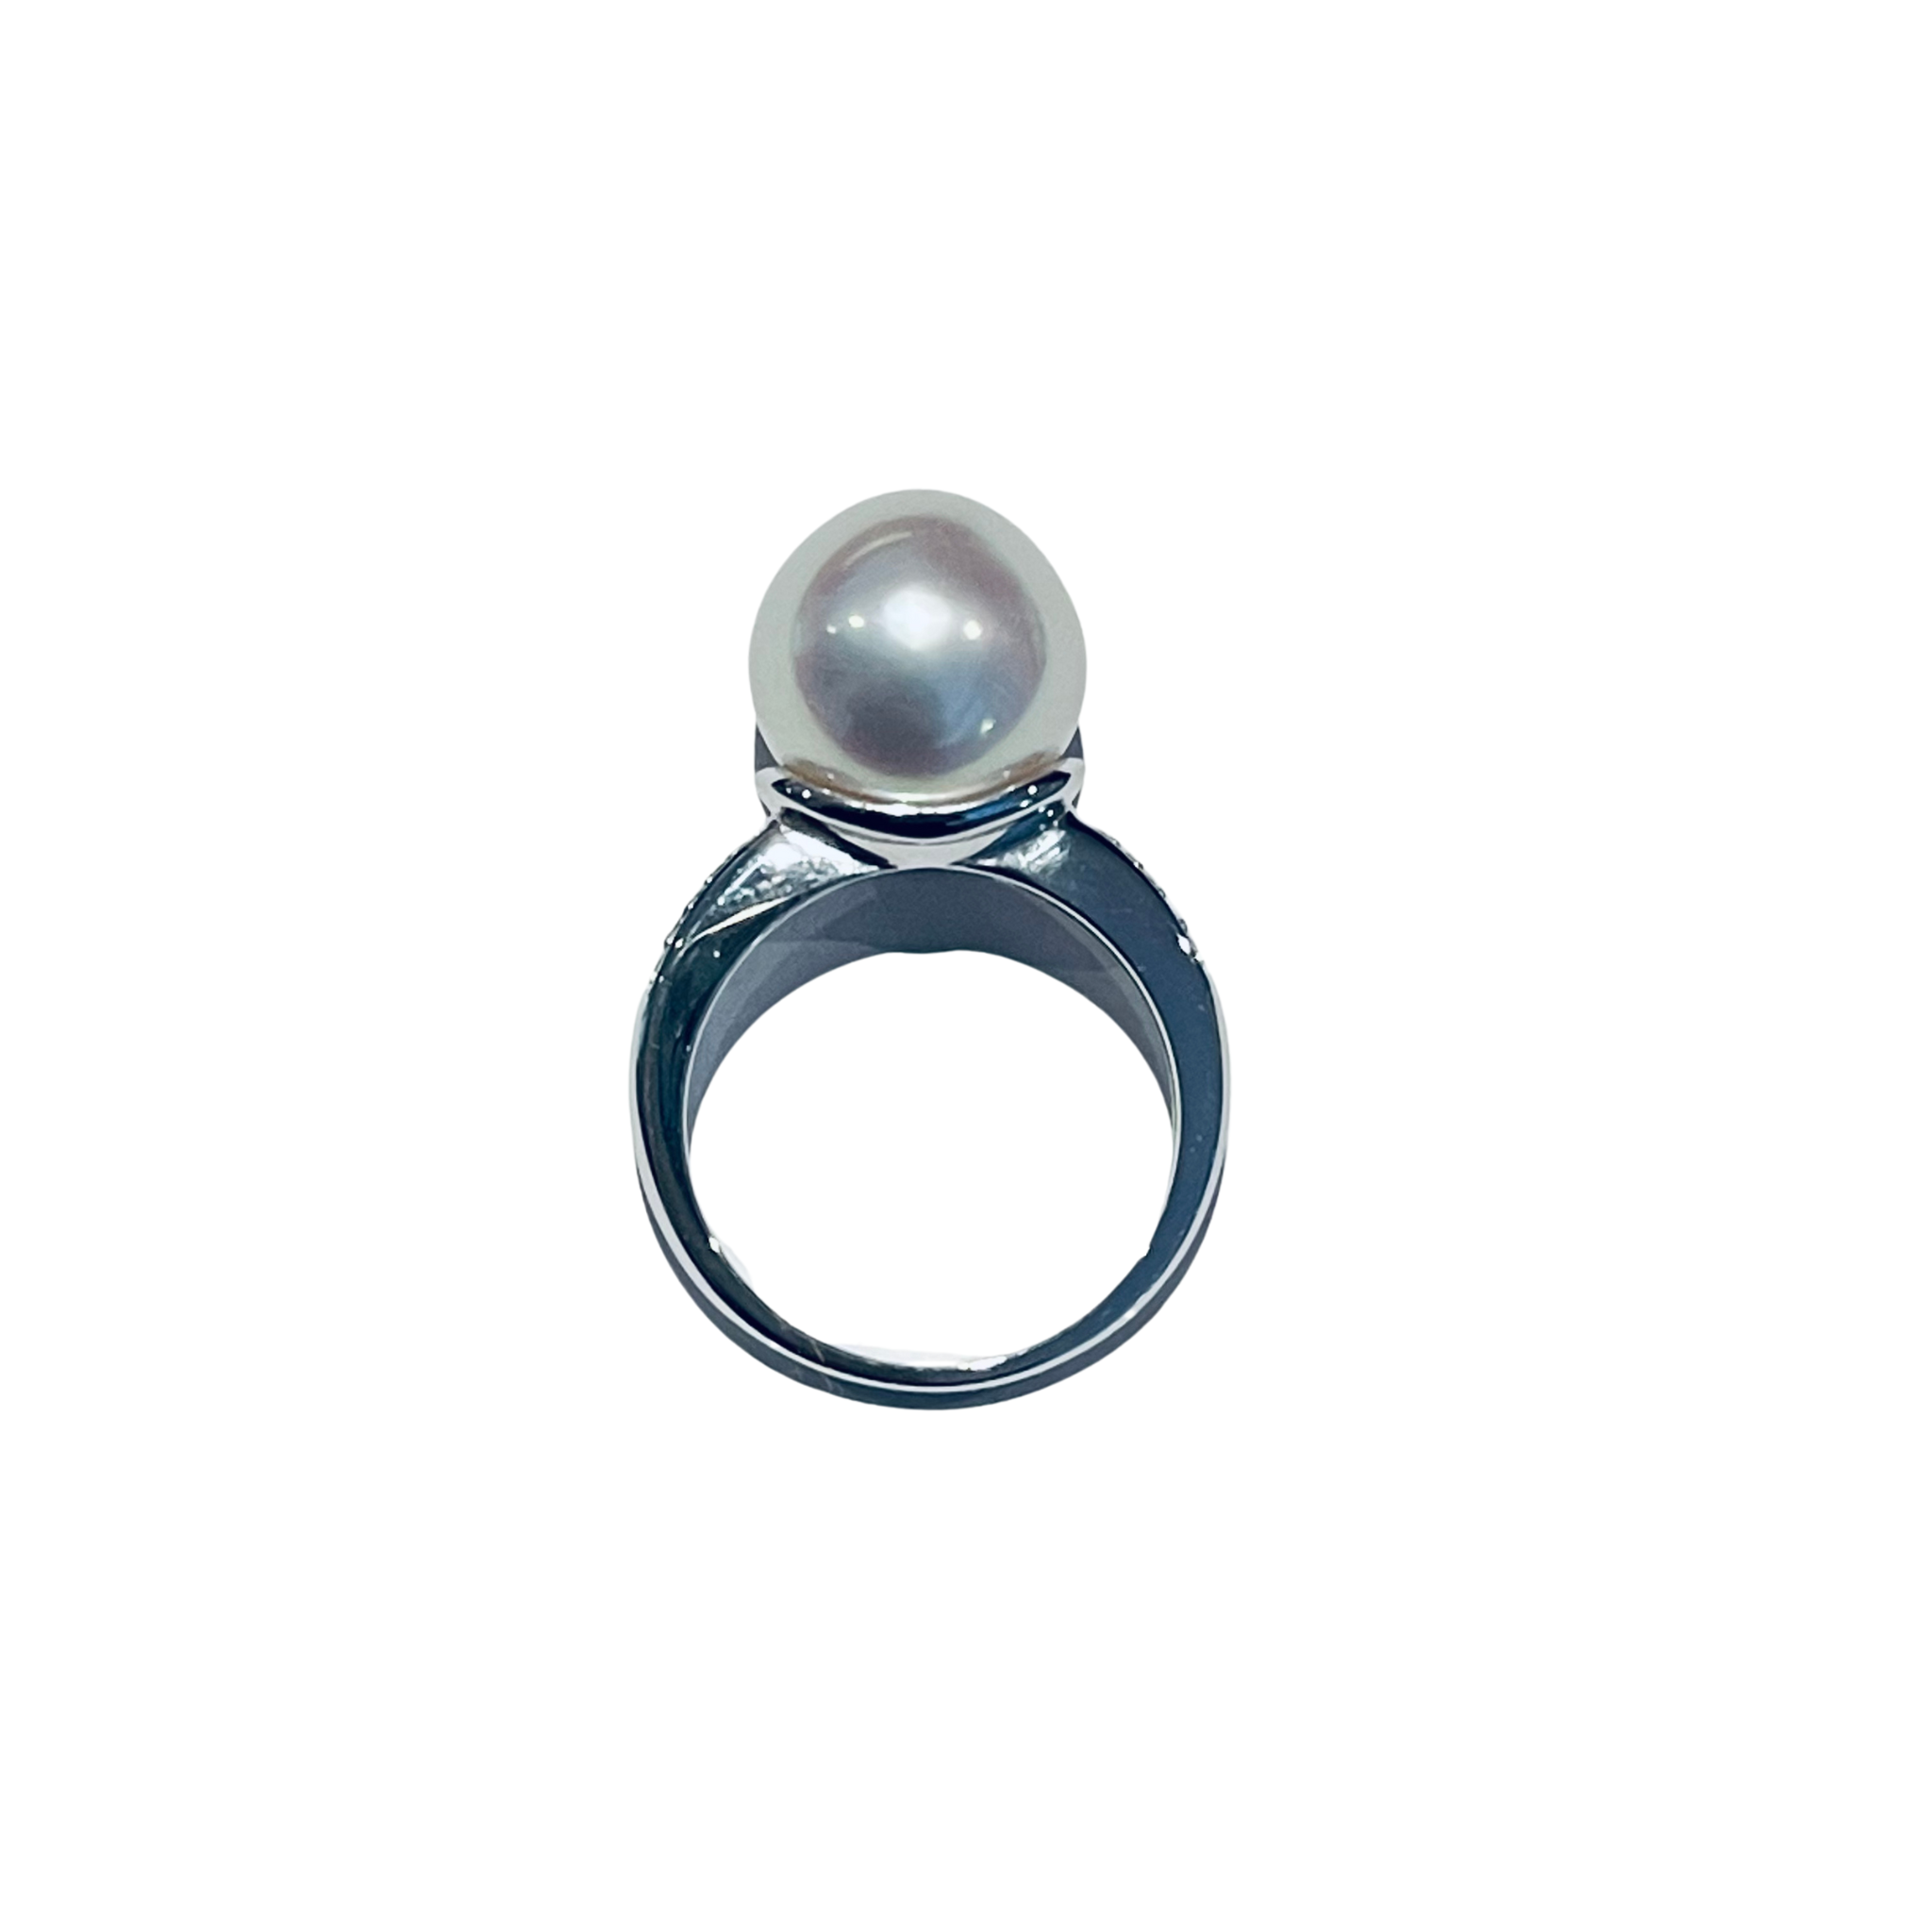 South sea pearl ring